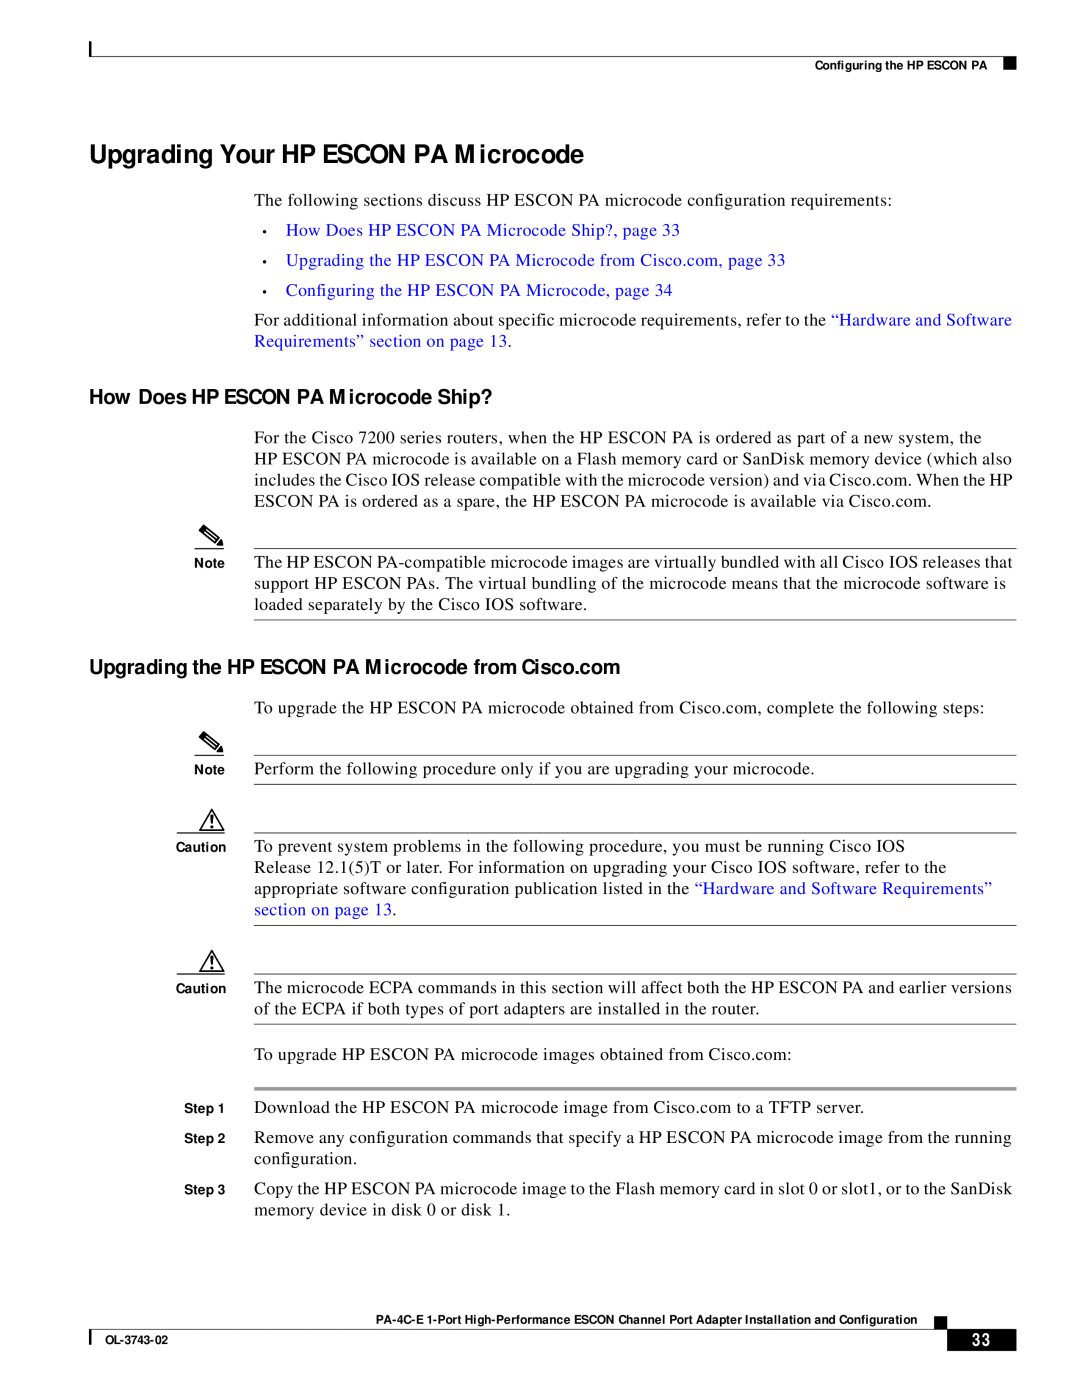 Cisco Systems PA-4C-E 1 manual Upgrading Your HP ESCON PA Microcode, How Does HP ESCON PA Microcode Ship? 